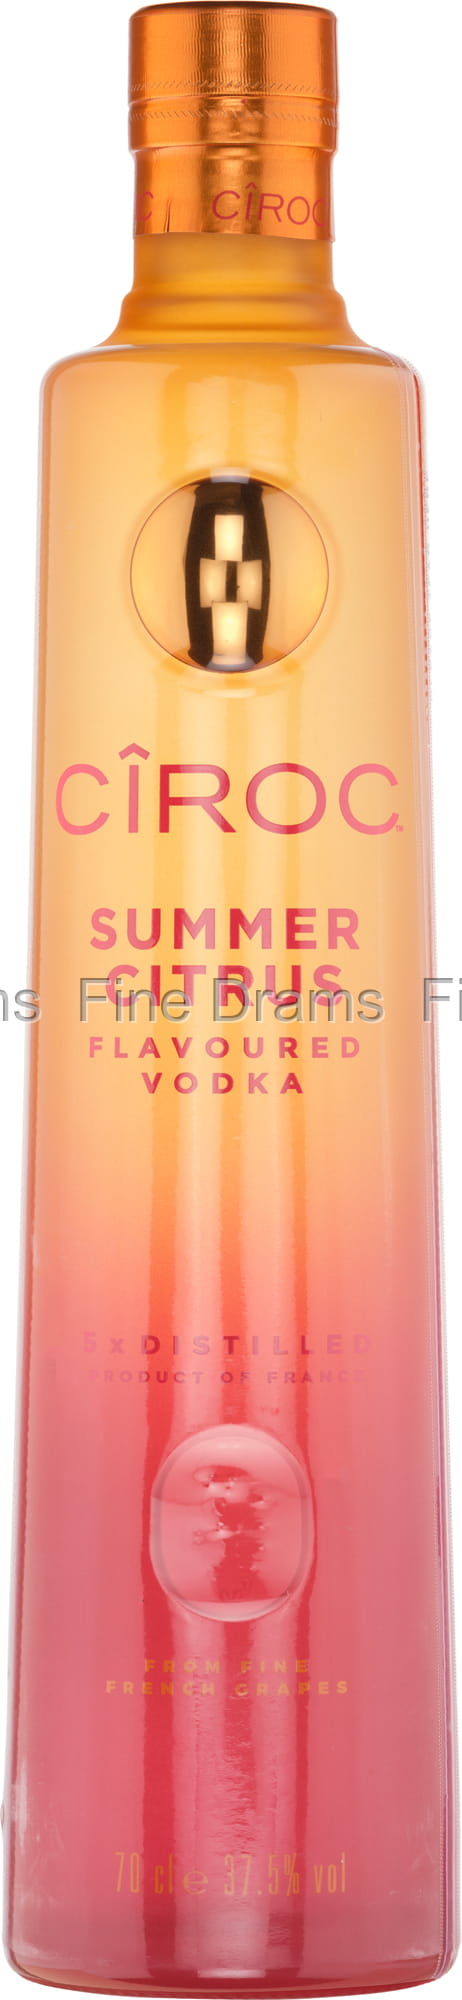 Cîroc Summer Citrus Vodka